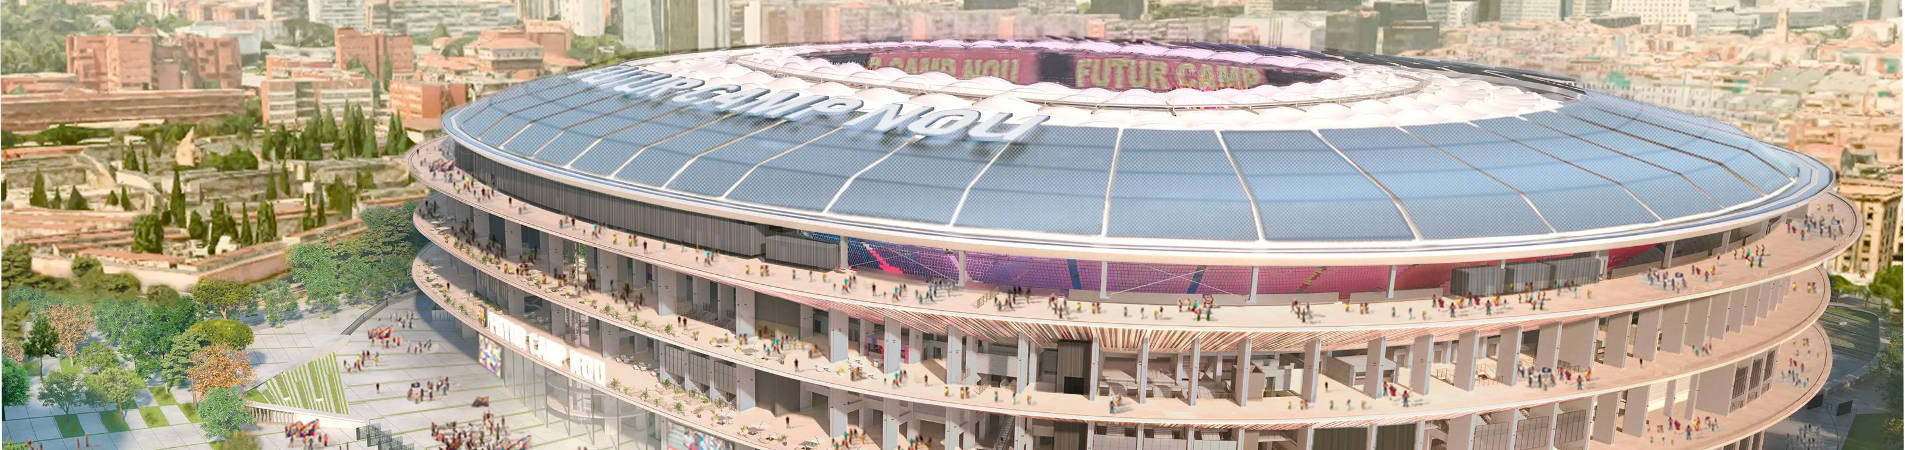 Verbouwing Camp Nou in Barcelona